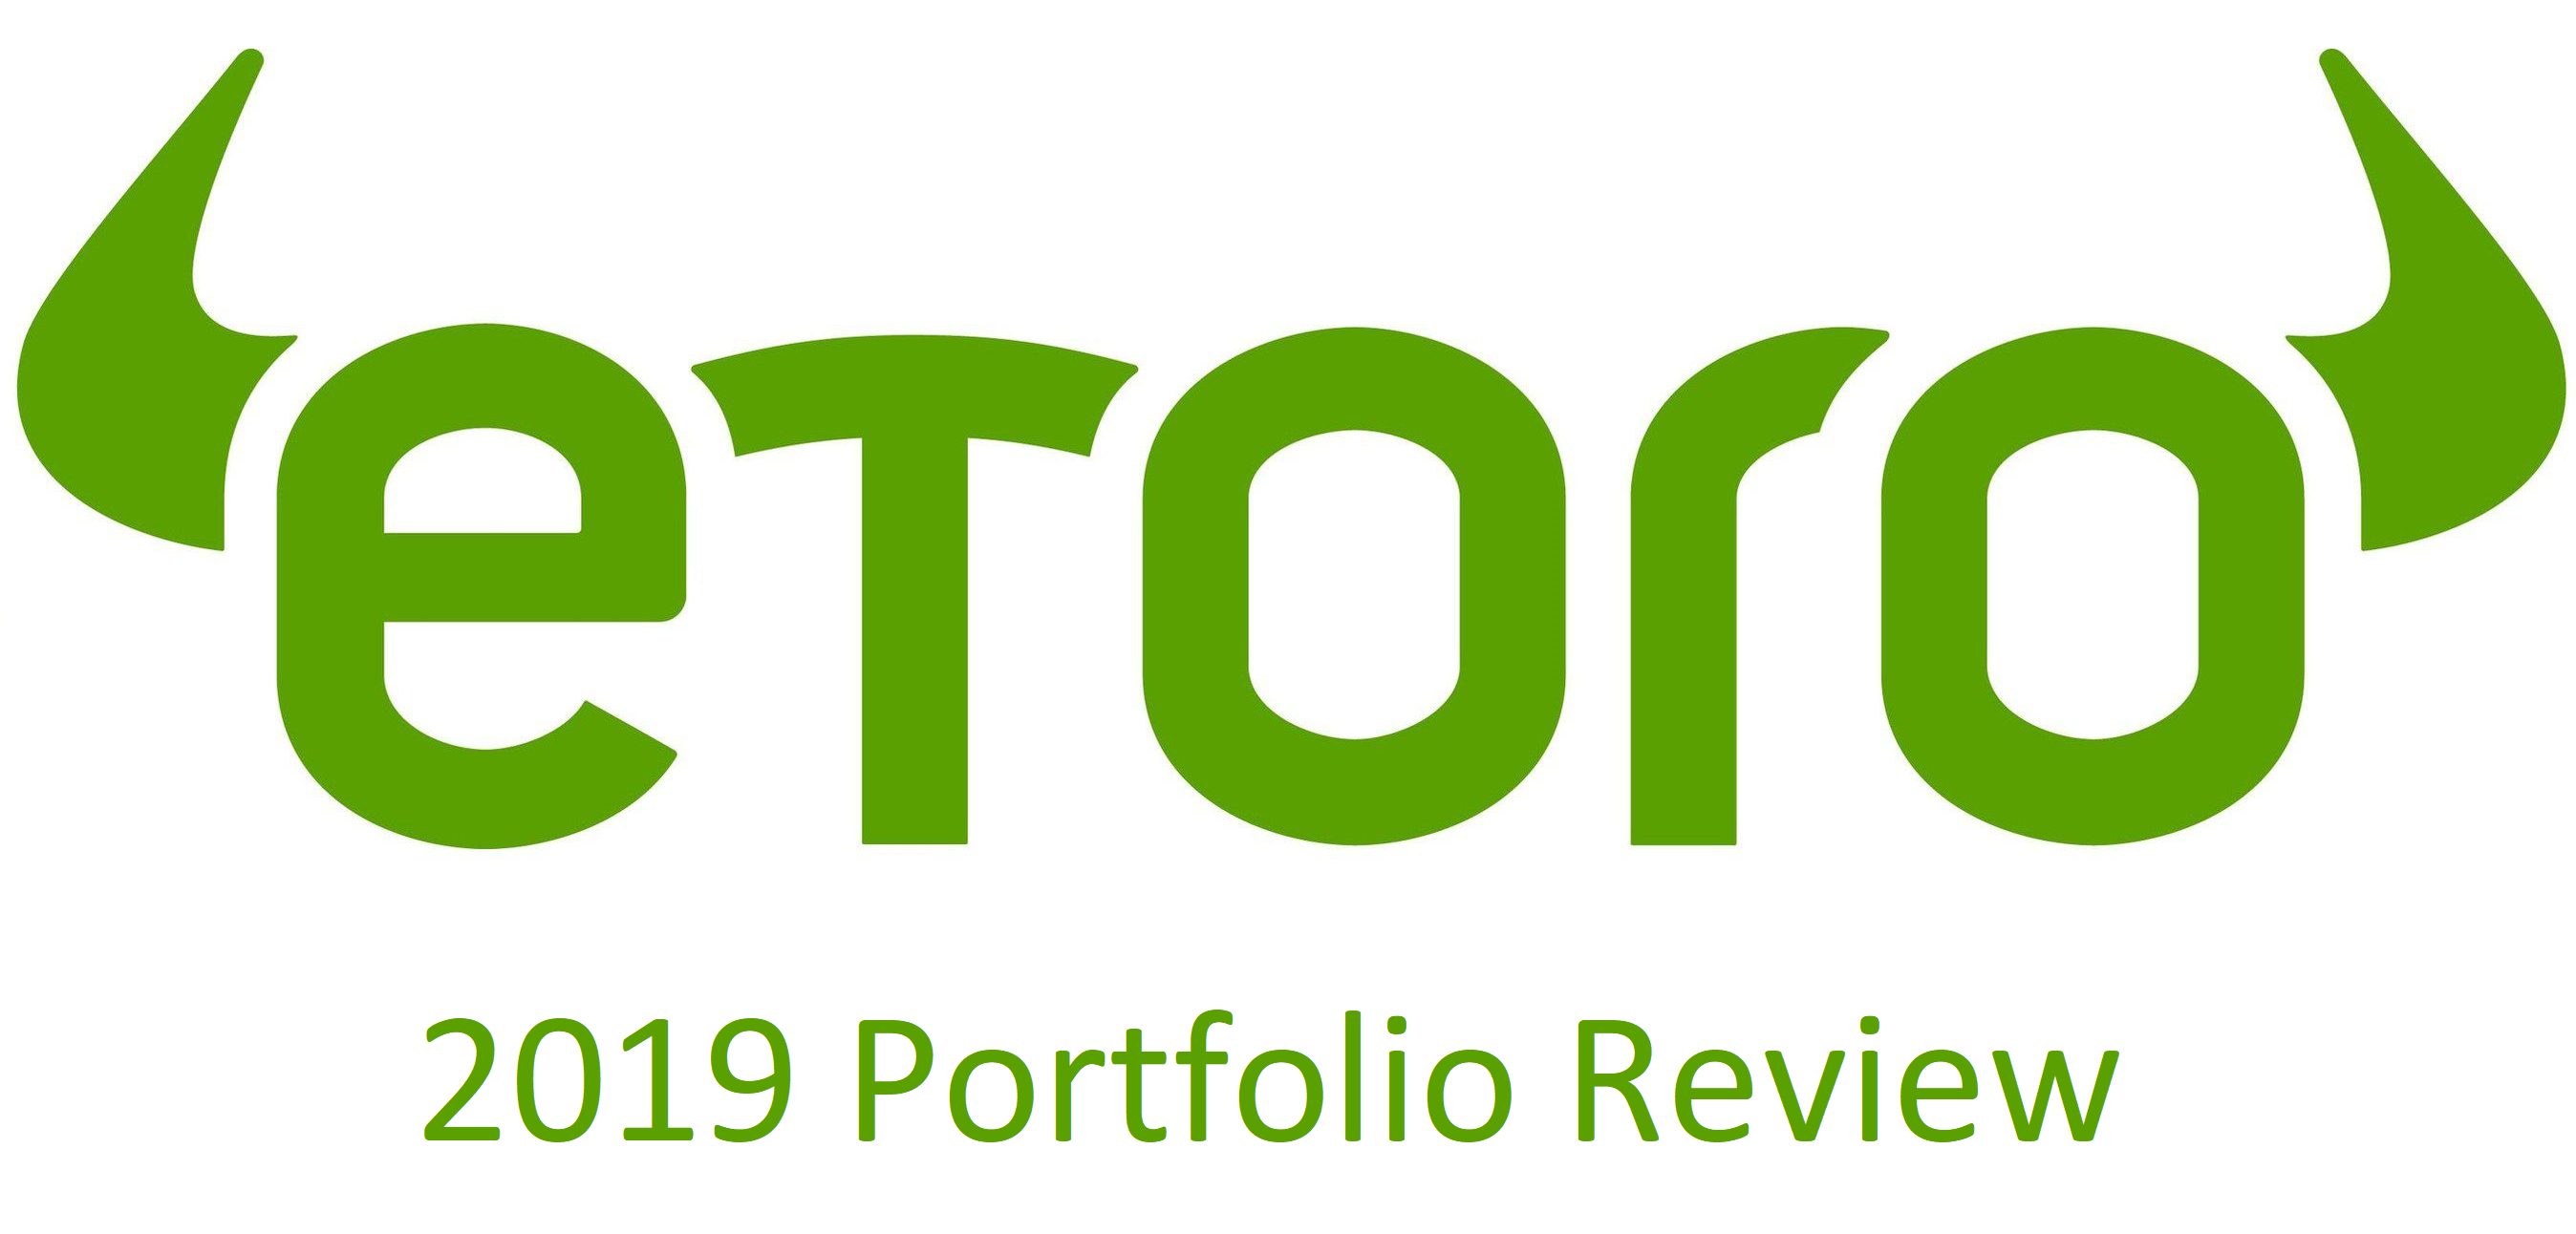 eToro Portfolio Review 2019 - Stock Up With Joe